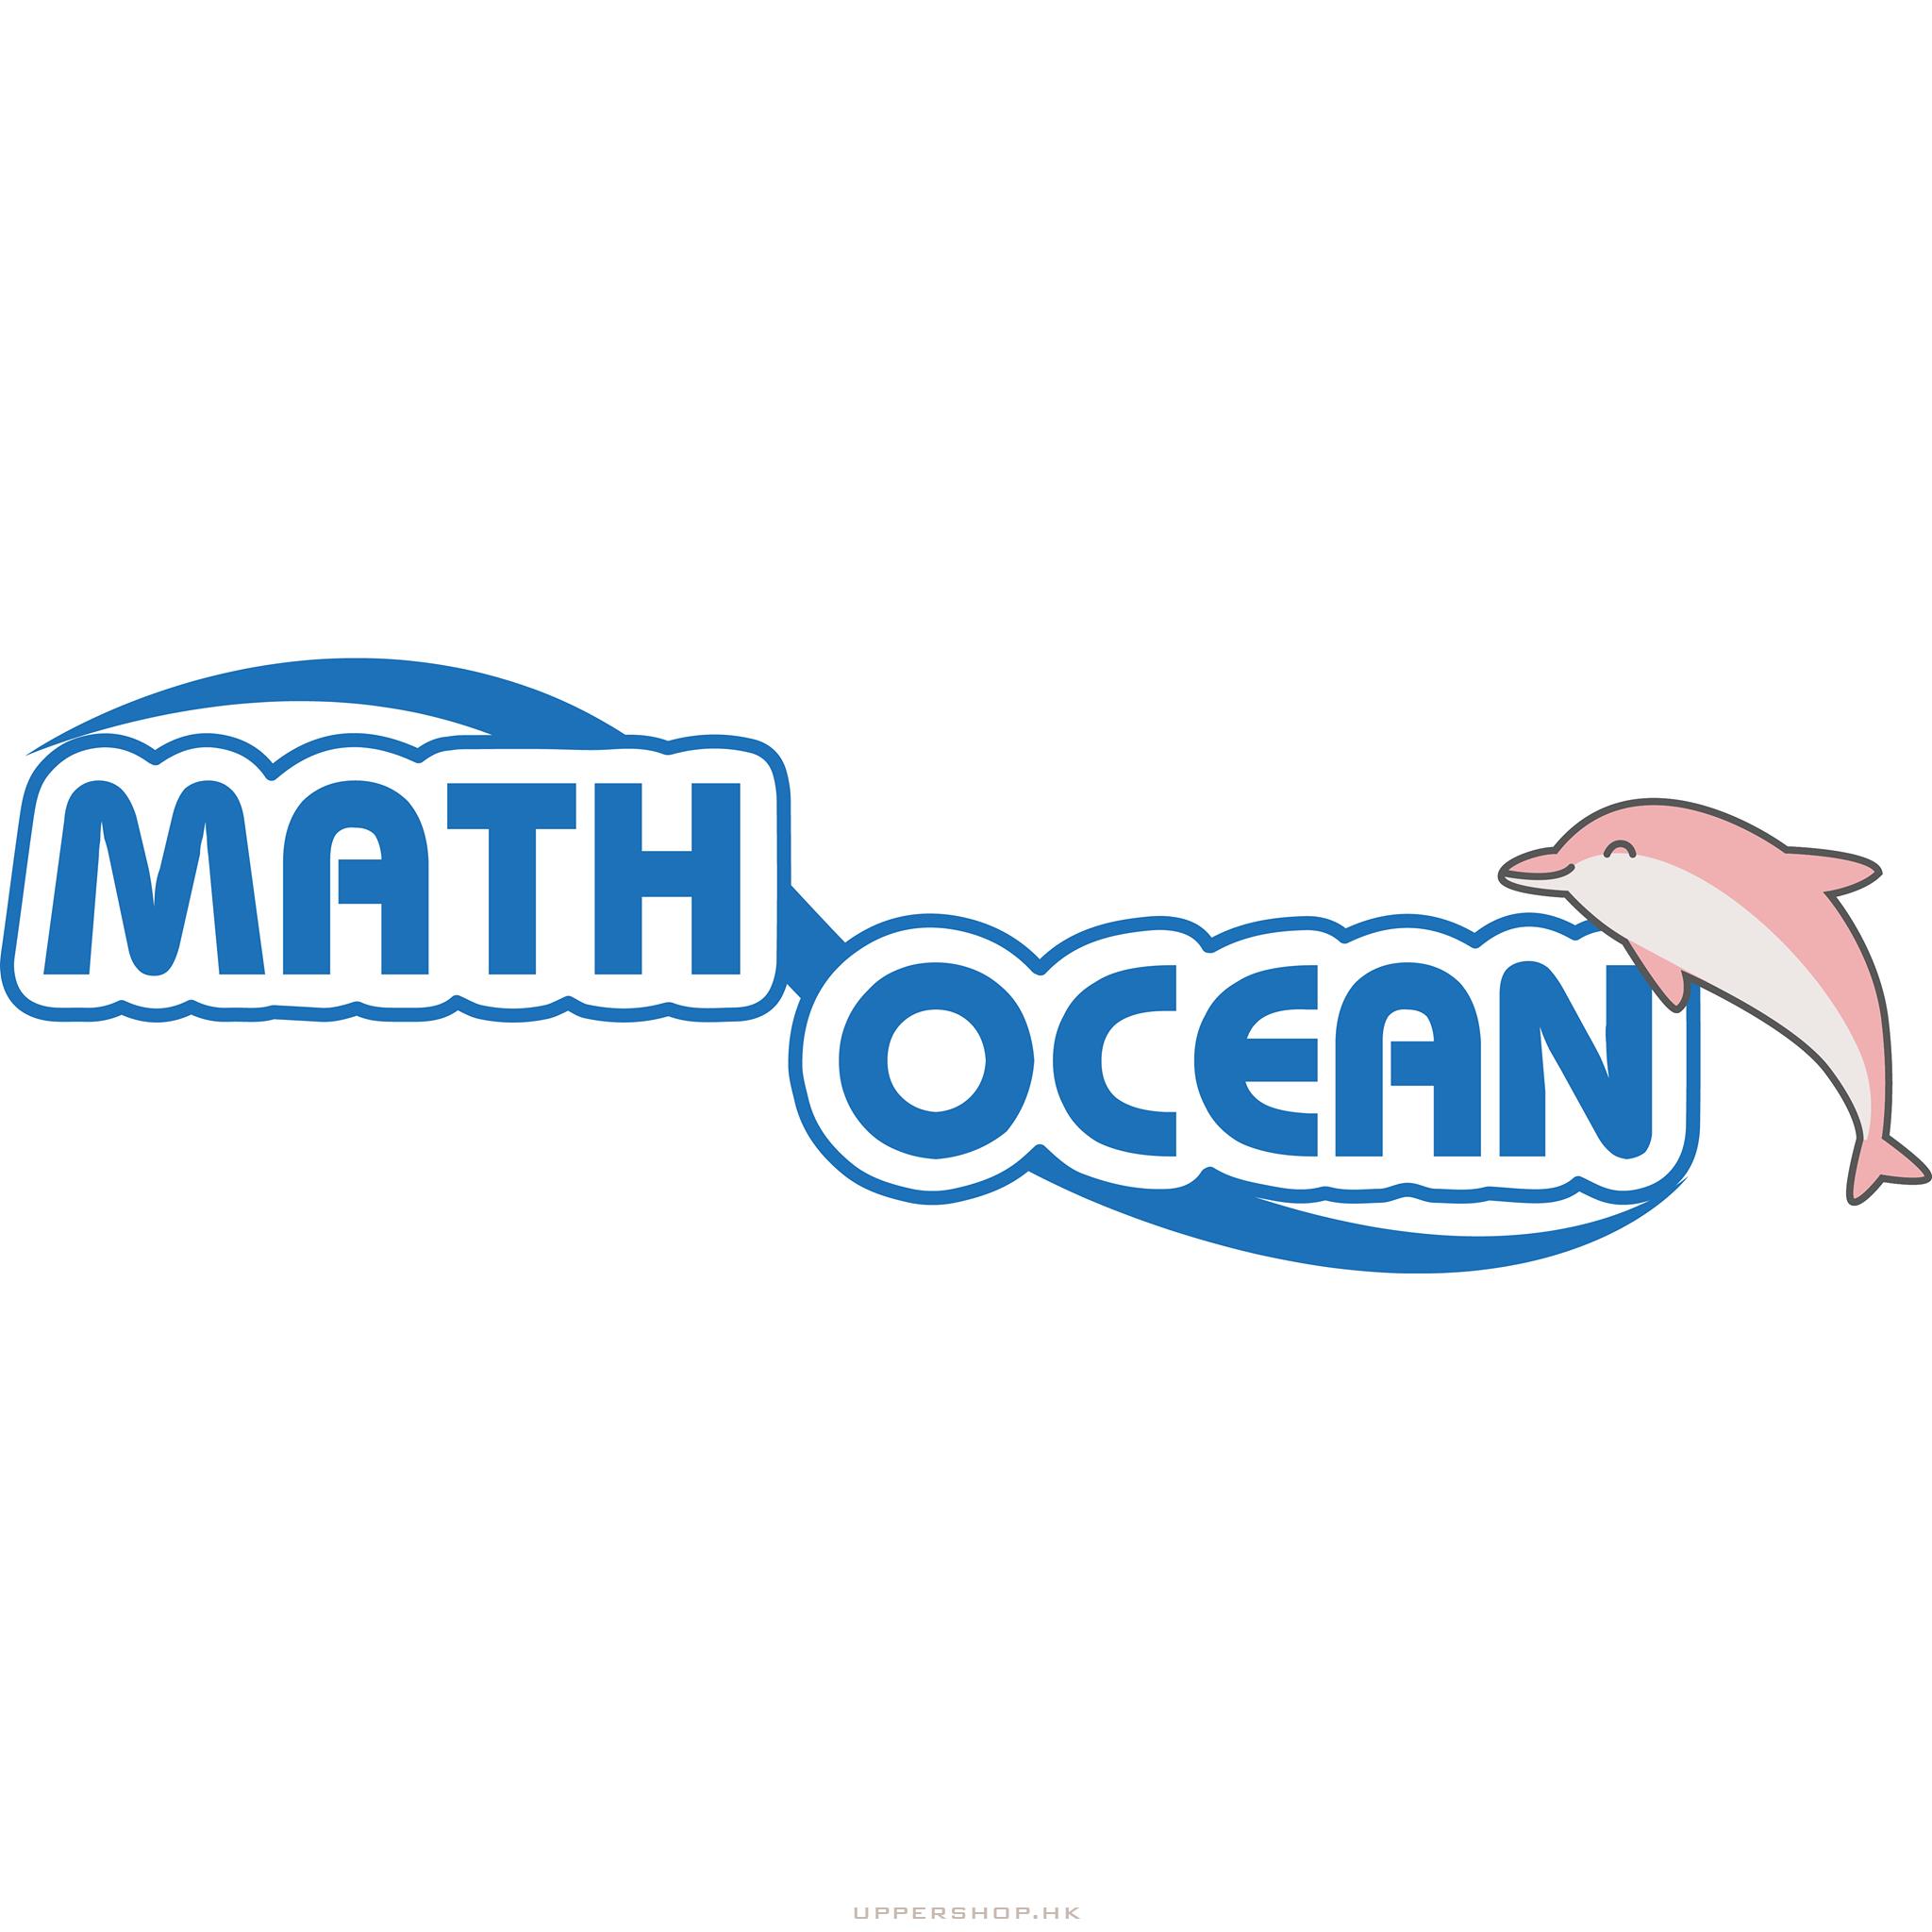 MATH OCEAN